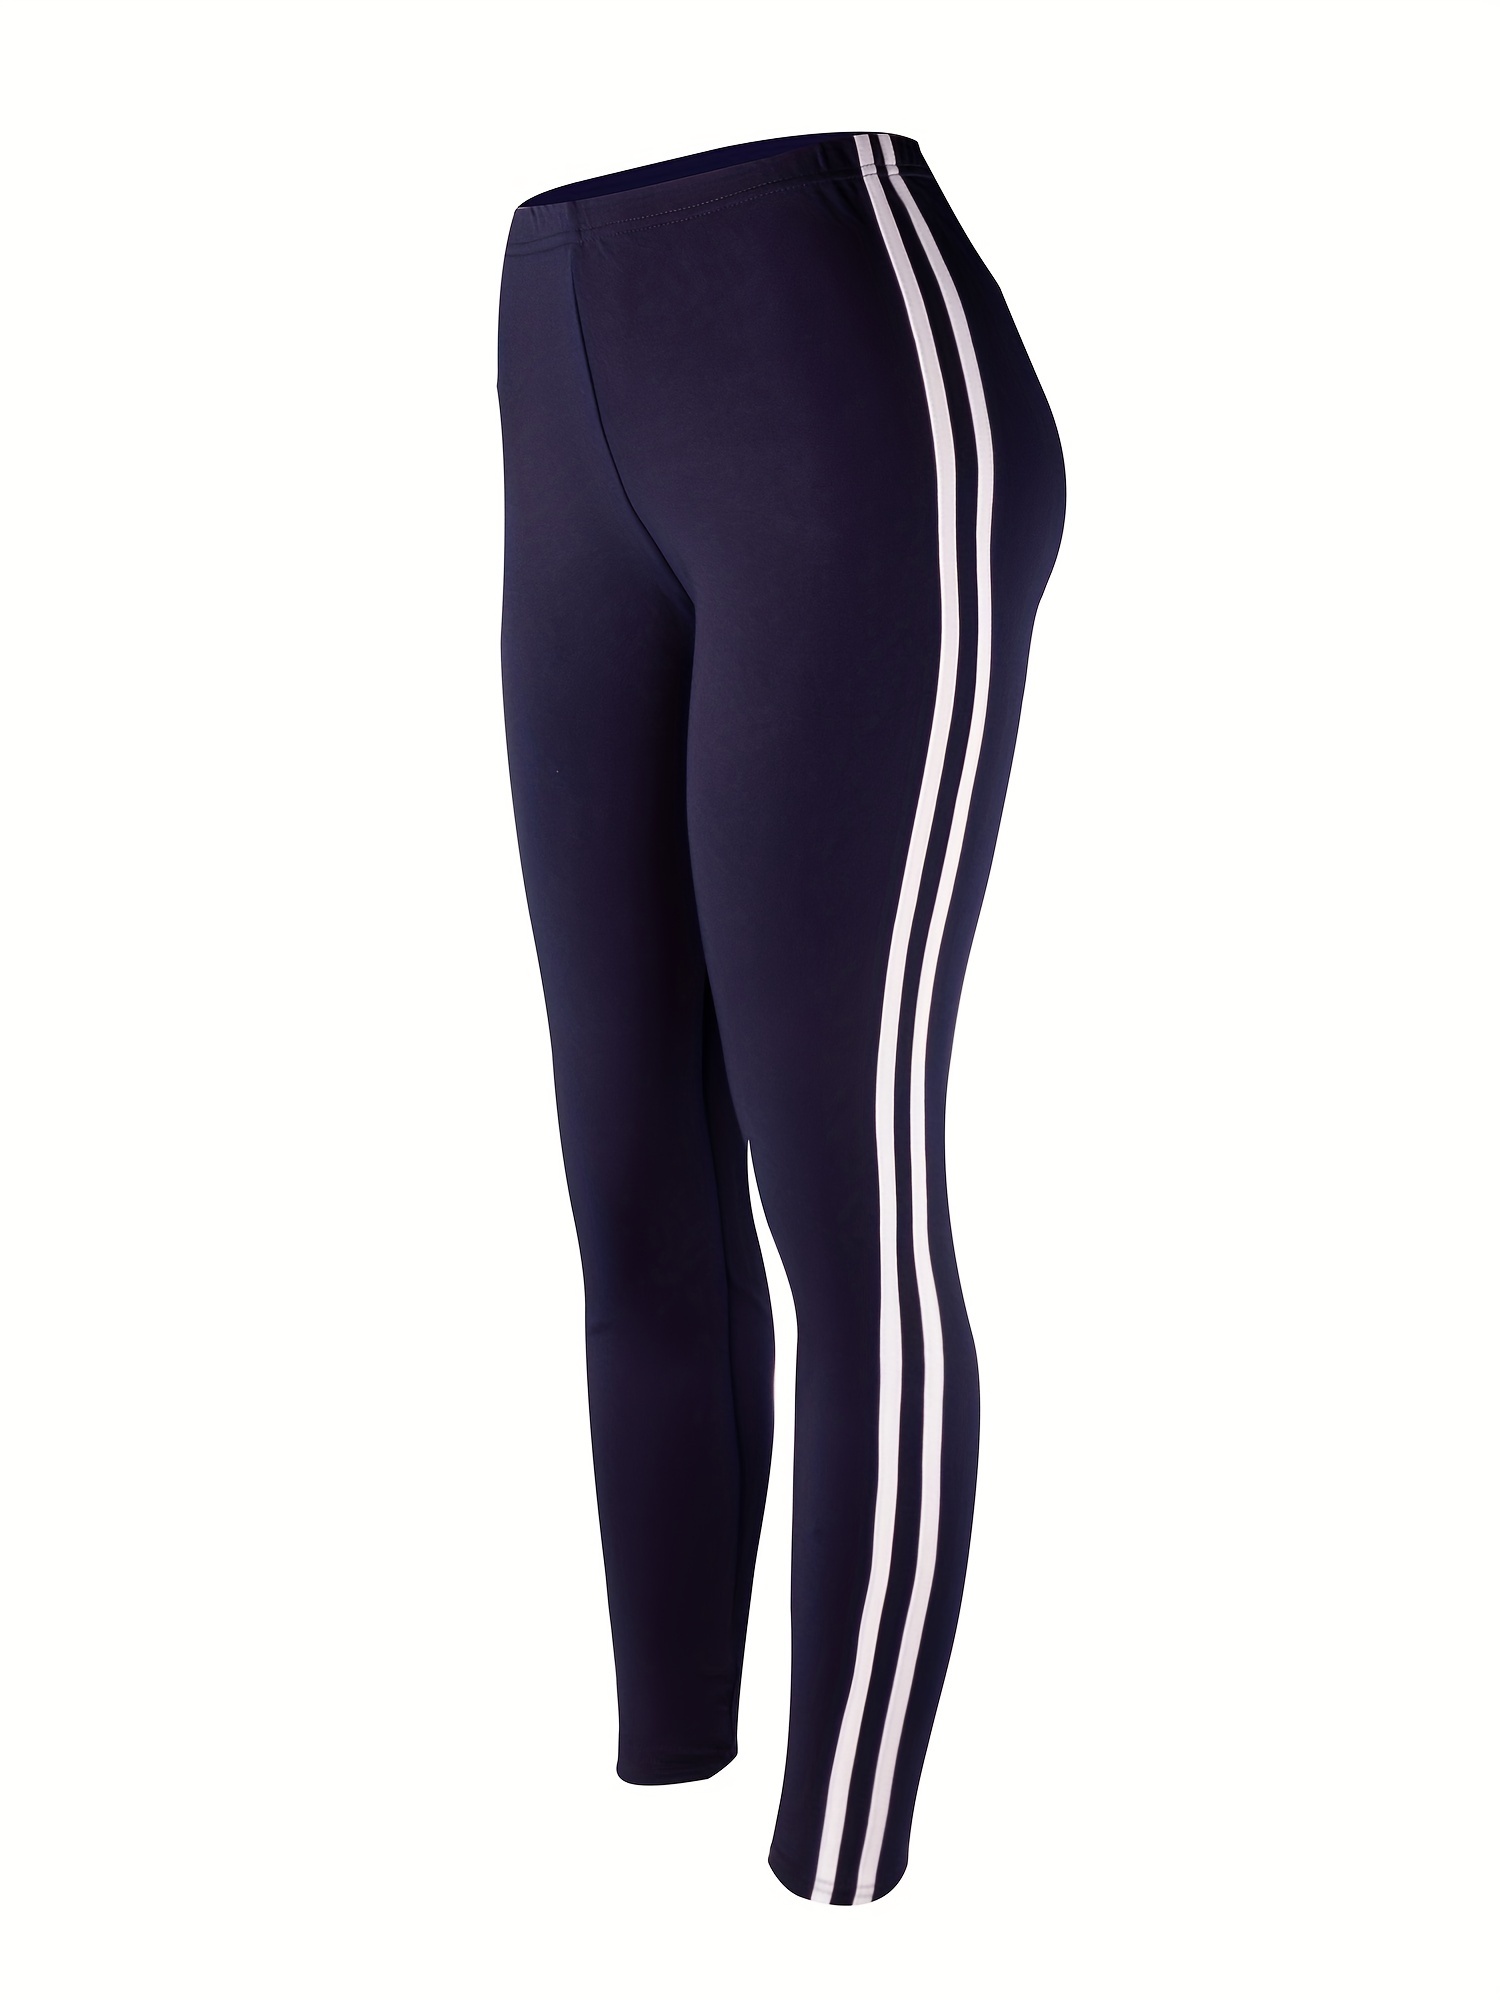 Buy Adidas women sportswear fit brand logo training leggings navy